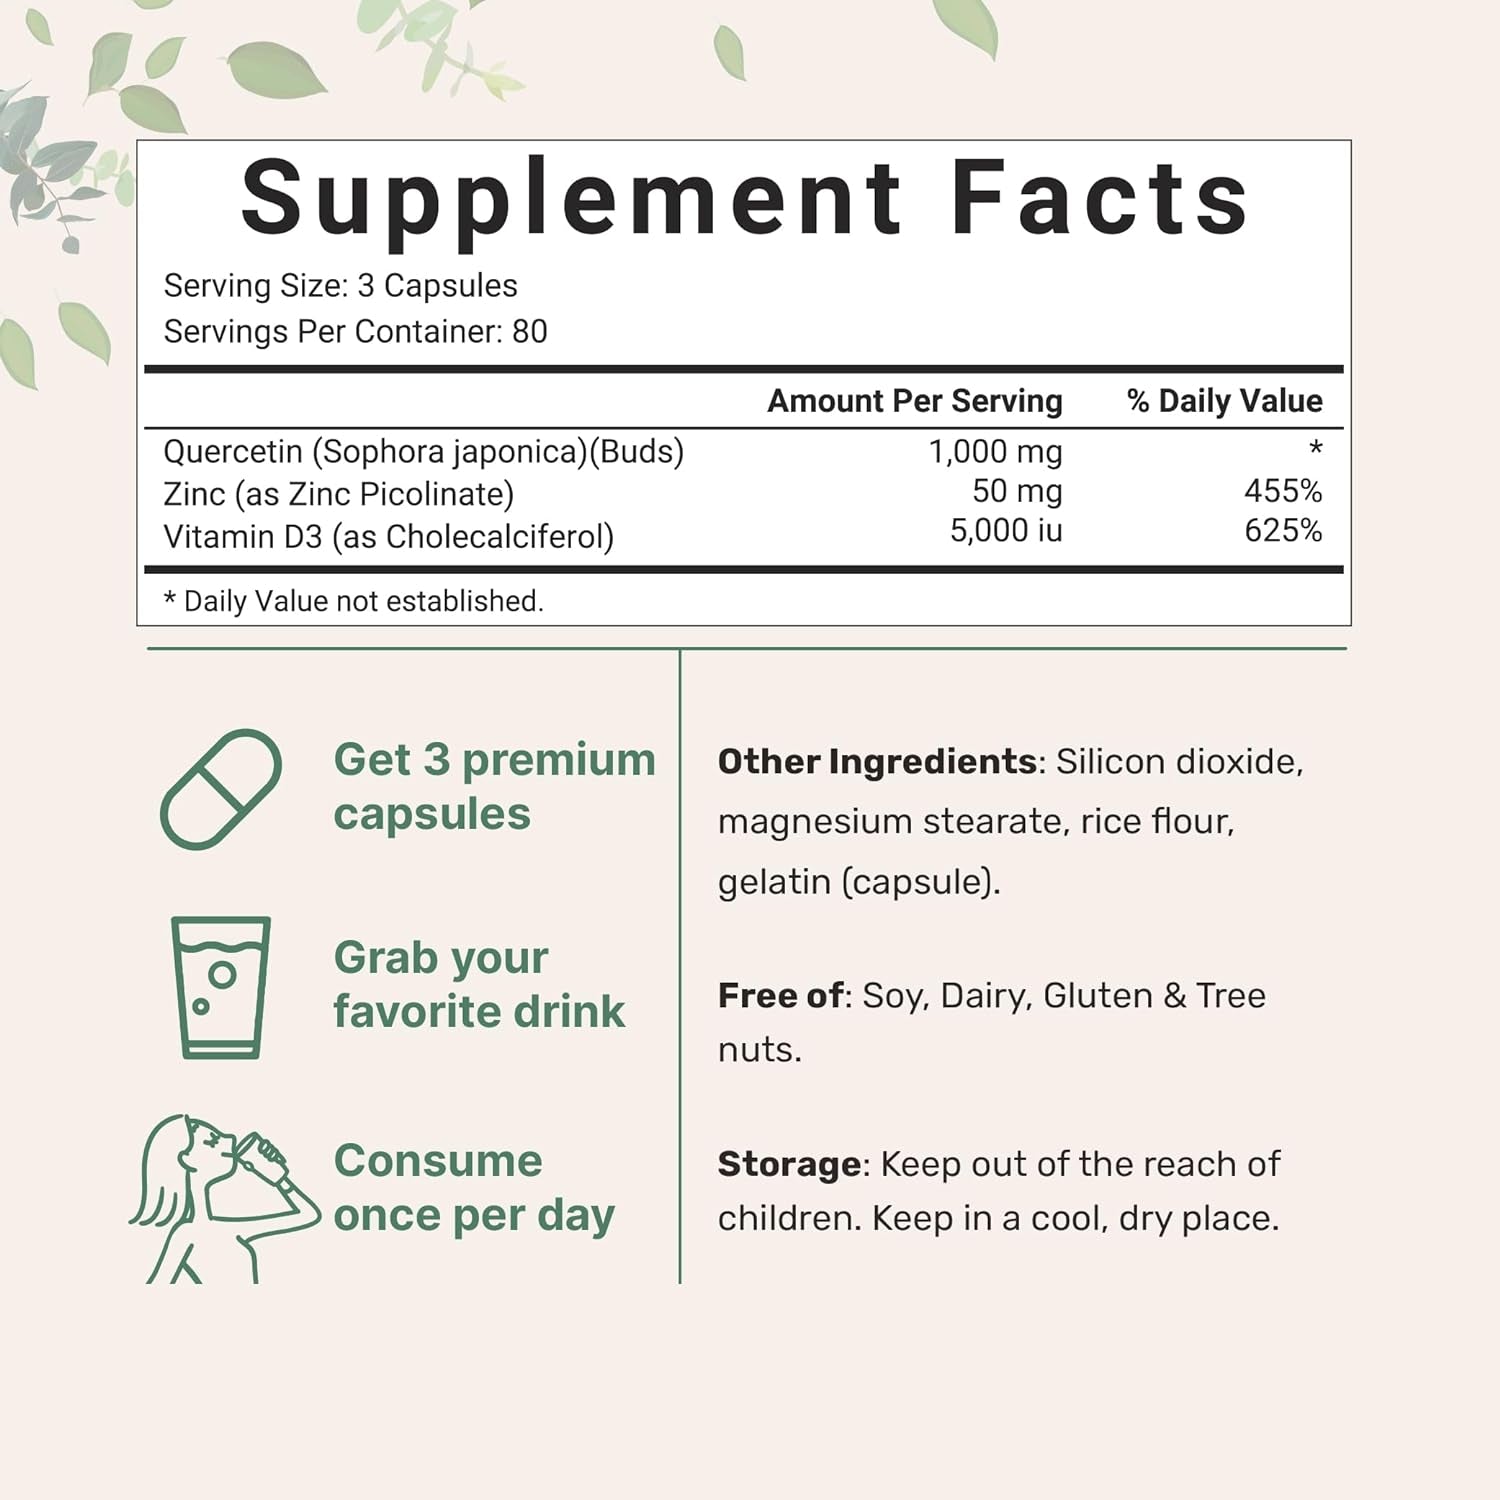 Quercetin Supplements with Zinc & Vitamin D3, 1,000Mg per Serving, 240 Capsules | 3 in 1 – Quercetin 1,000Mg, Zinc Picolinate 50Mg, & Vitamin D 5,000Iu | Immune Support | Non-Gmo